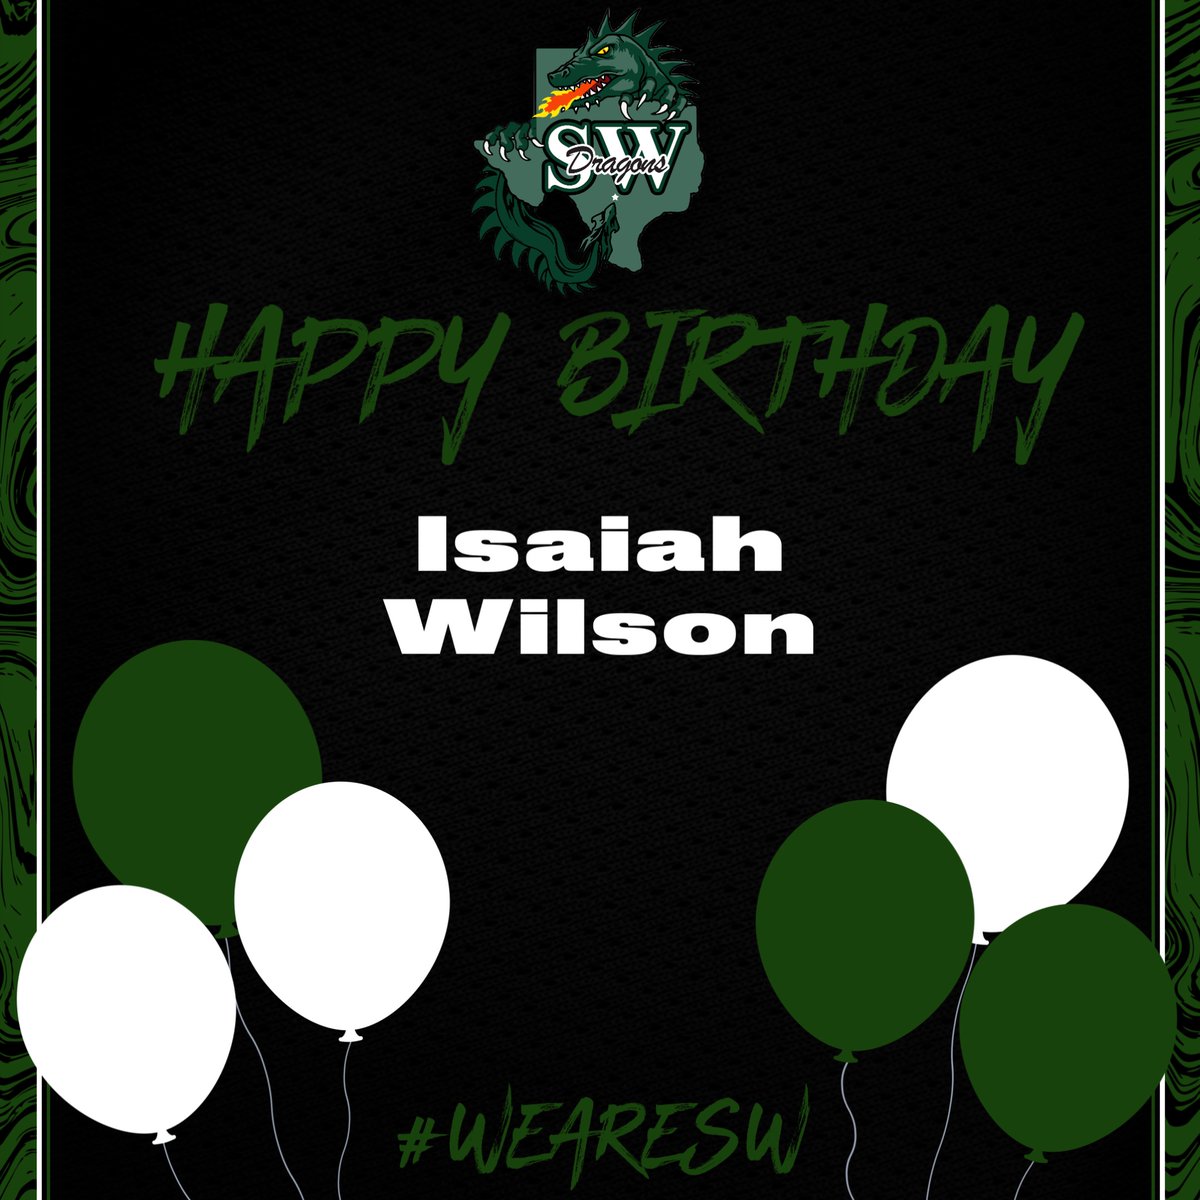 Happy Birthday Isaiah Wilson!!
#WeAreSW #DragonPride #OWOH #AAAO